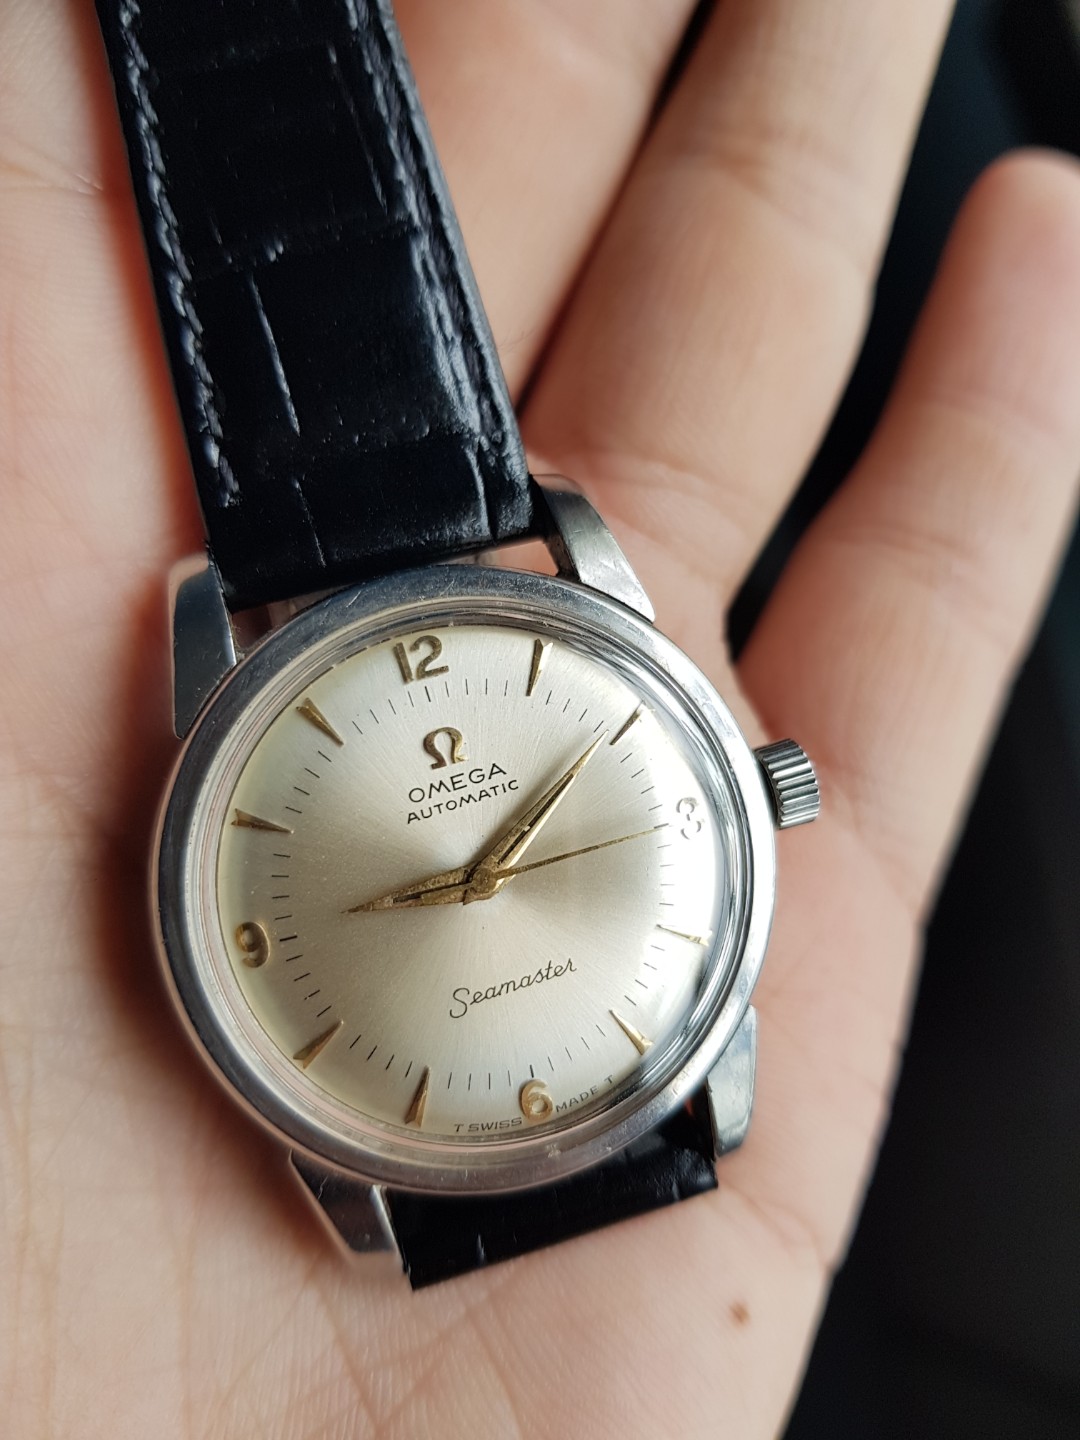 1954 omega watch